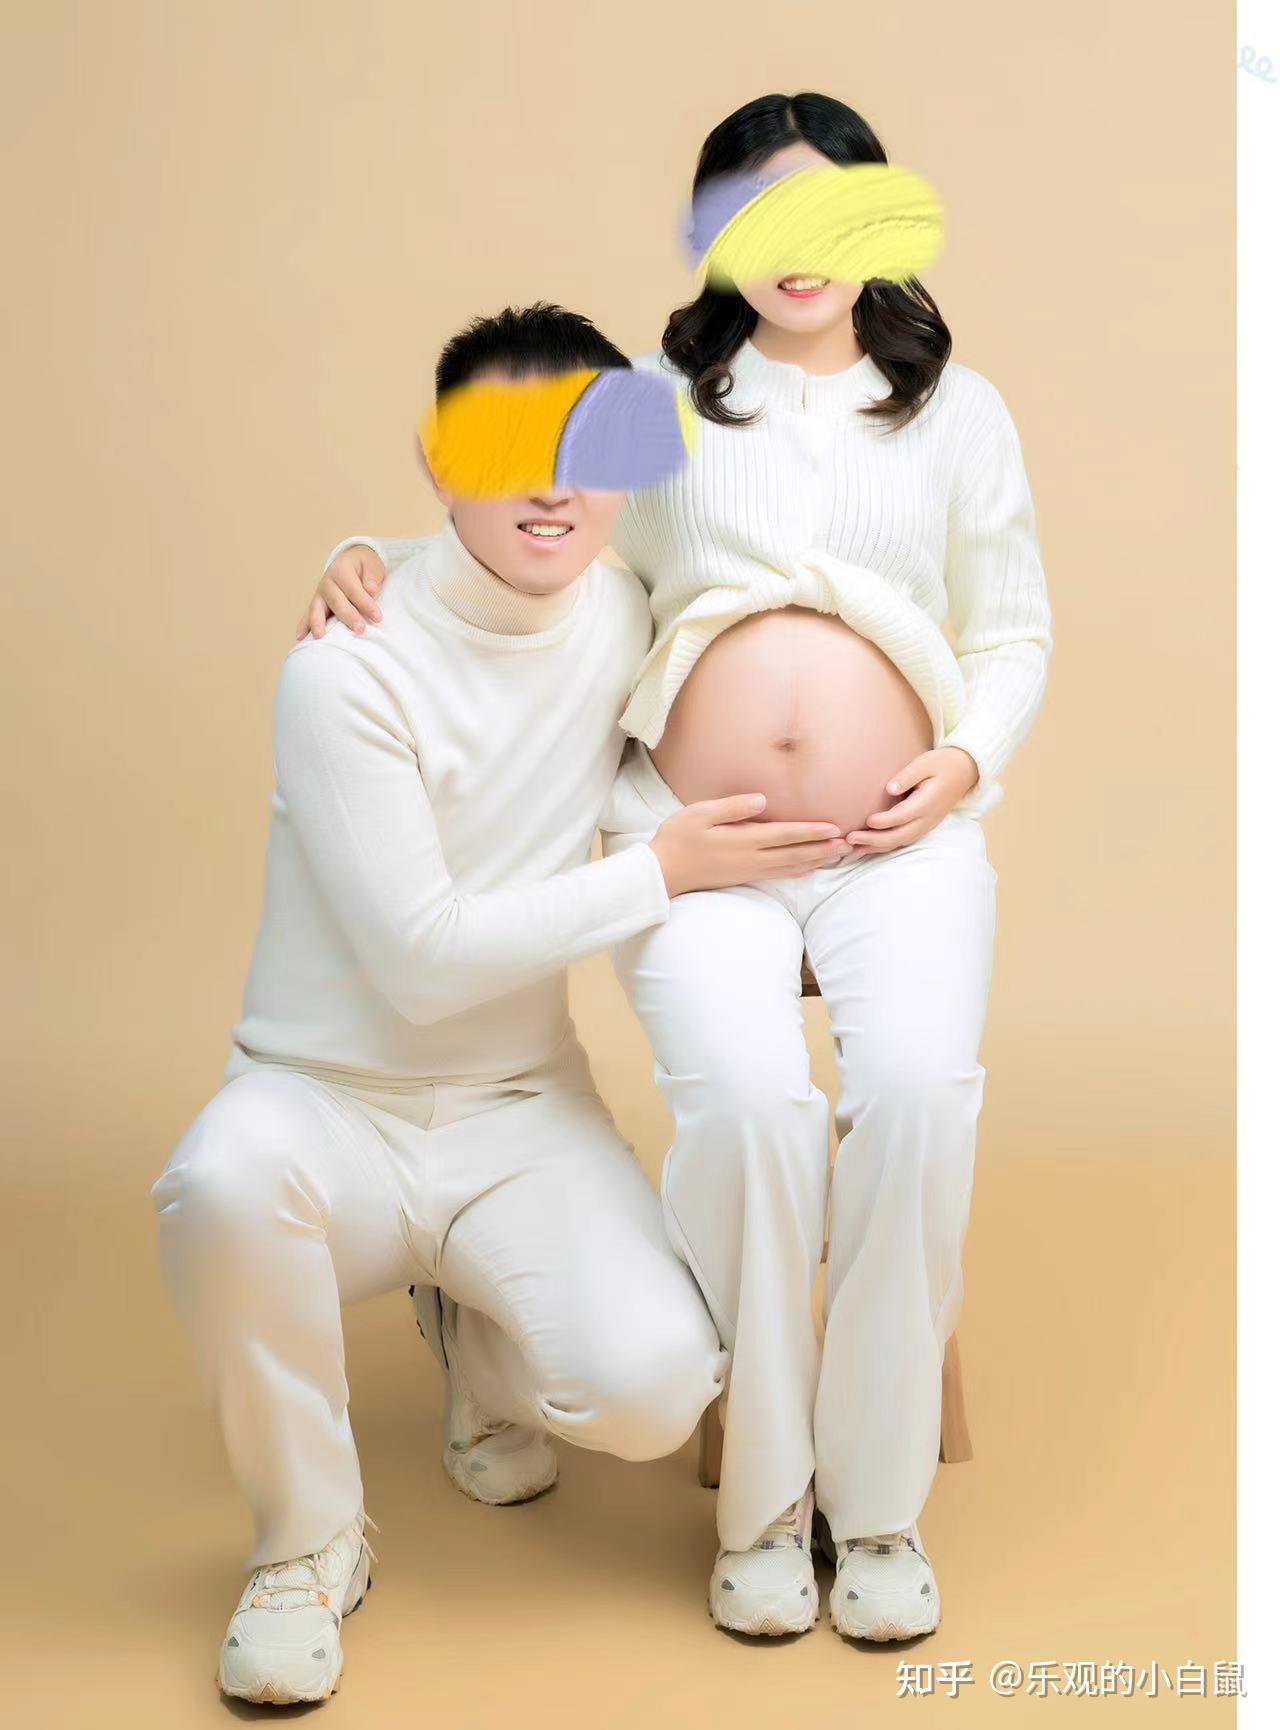 Pregnancy Photos Tips | 大肚相, 孕婦照的小Tips | Wedding Photographer in Hong Kong - Billy ONAIR Photography